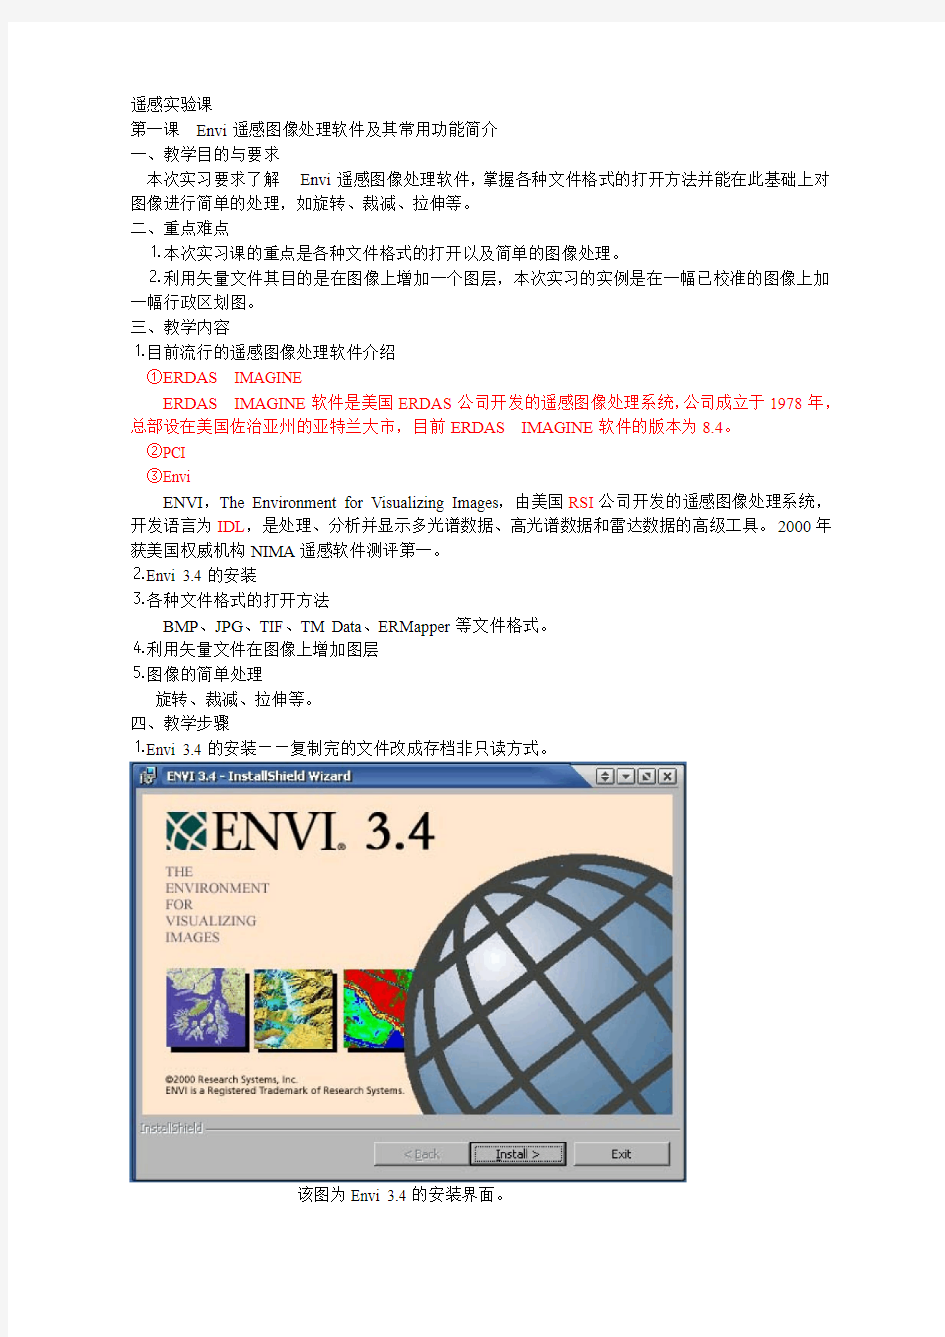 1.Envi遥感图像处理软件及其常用功能简介